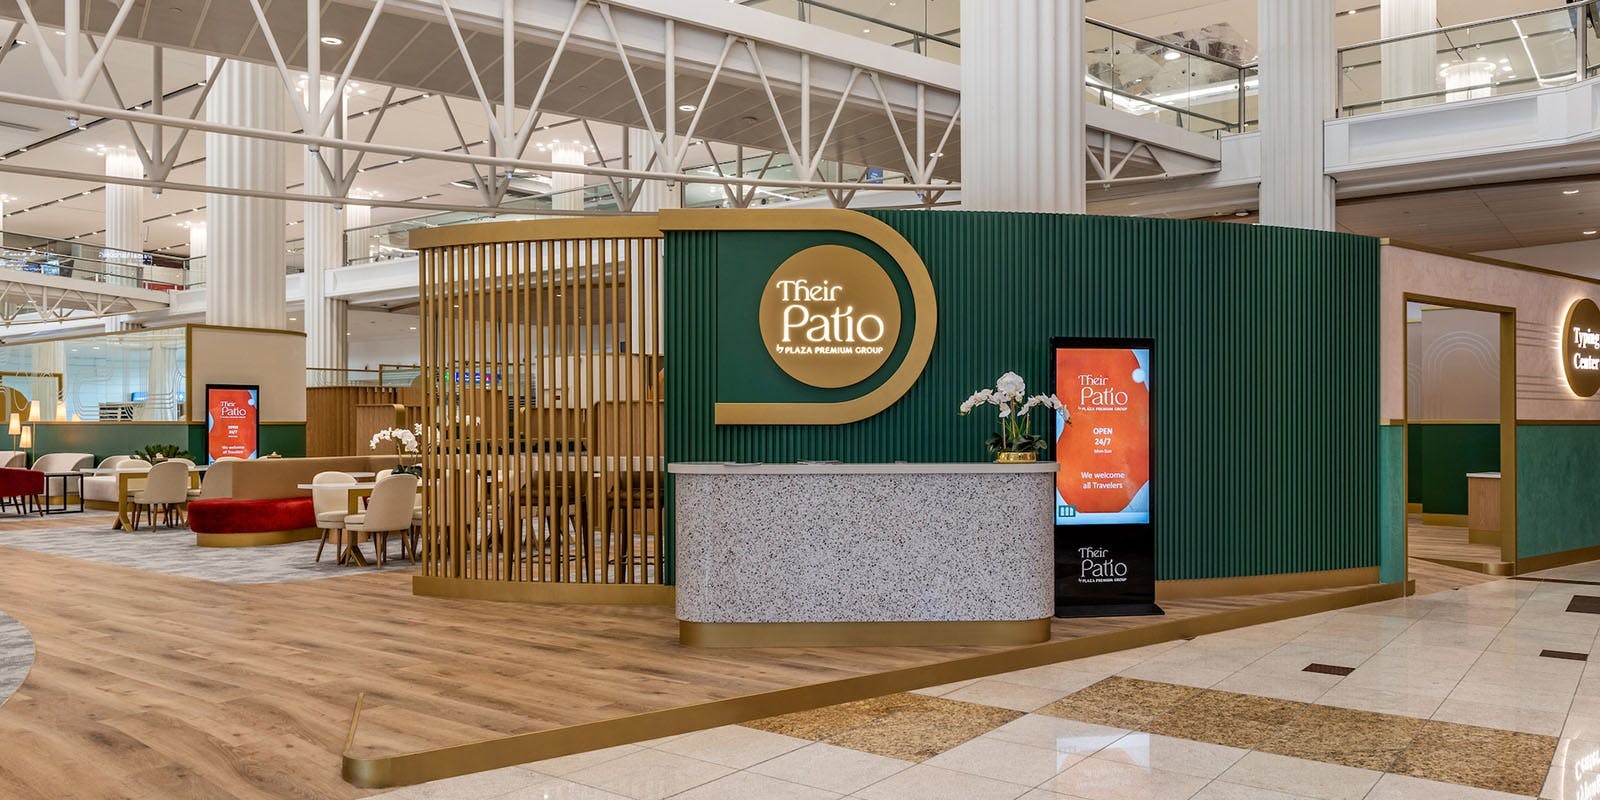 Their Patio by Plaza Premium Group at Dubai International Airport Musement